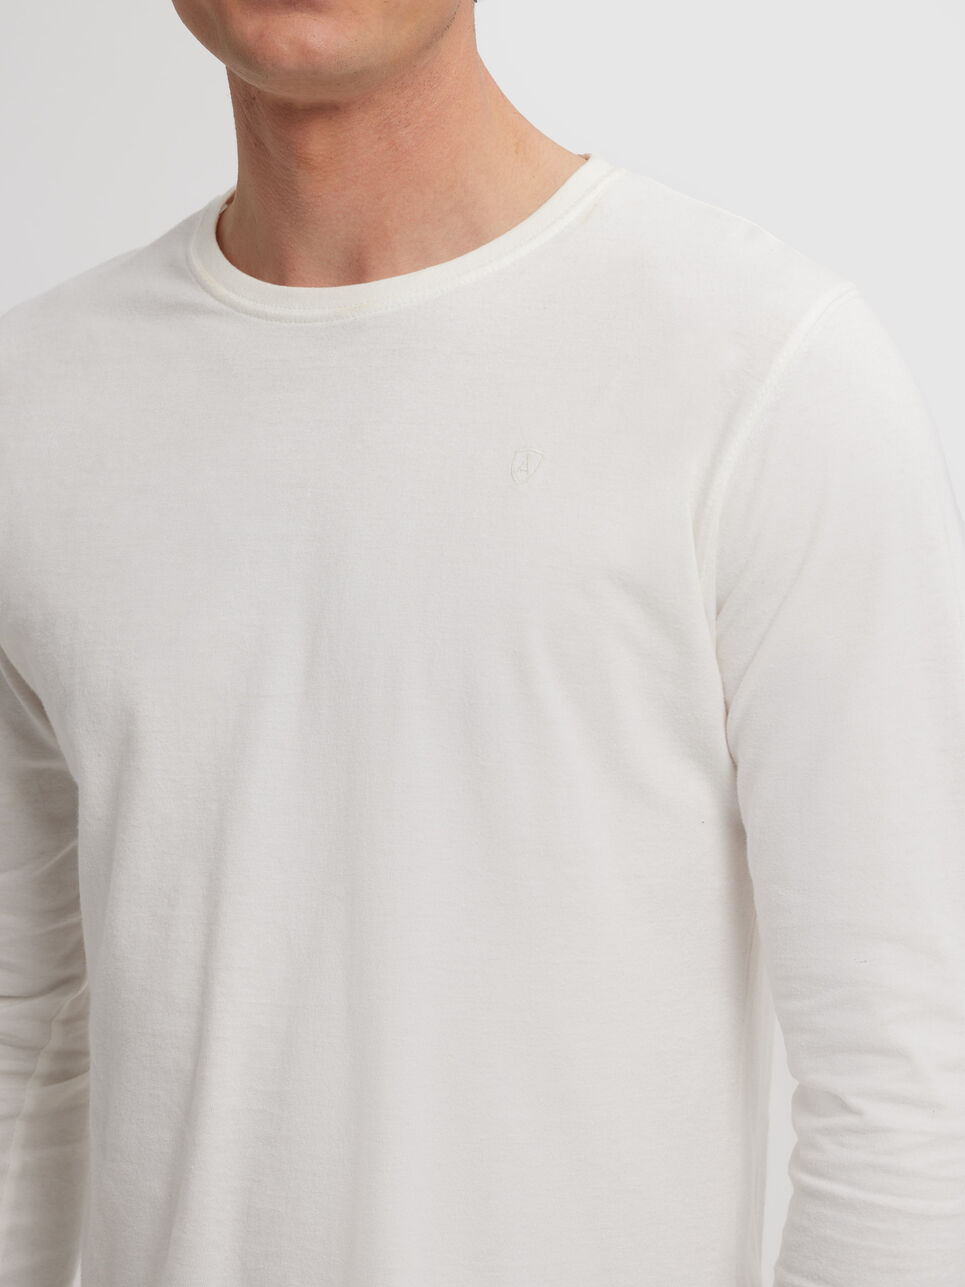 Camiseta básica manga larga blanco Talla L Color BLANCO